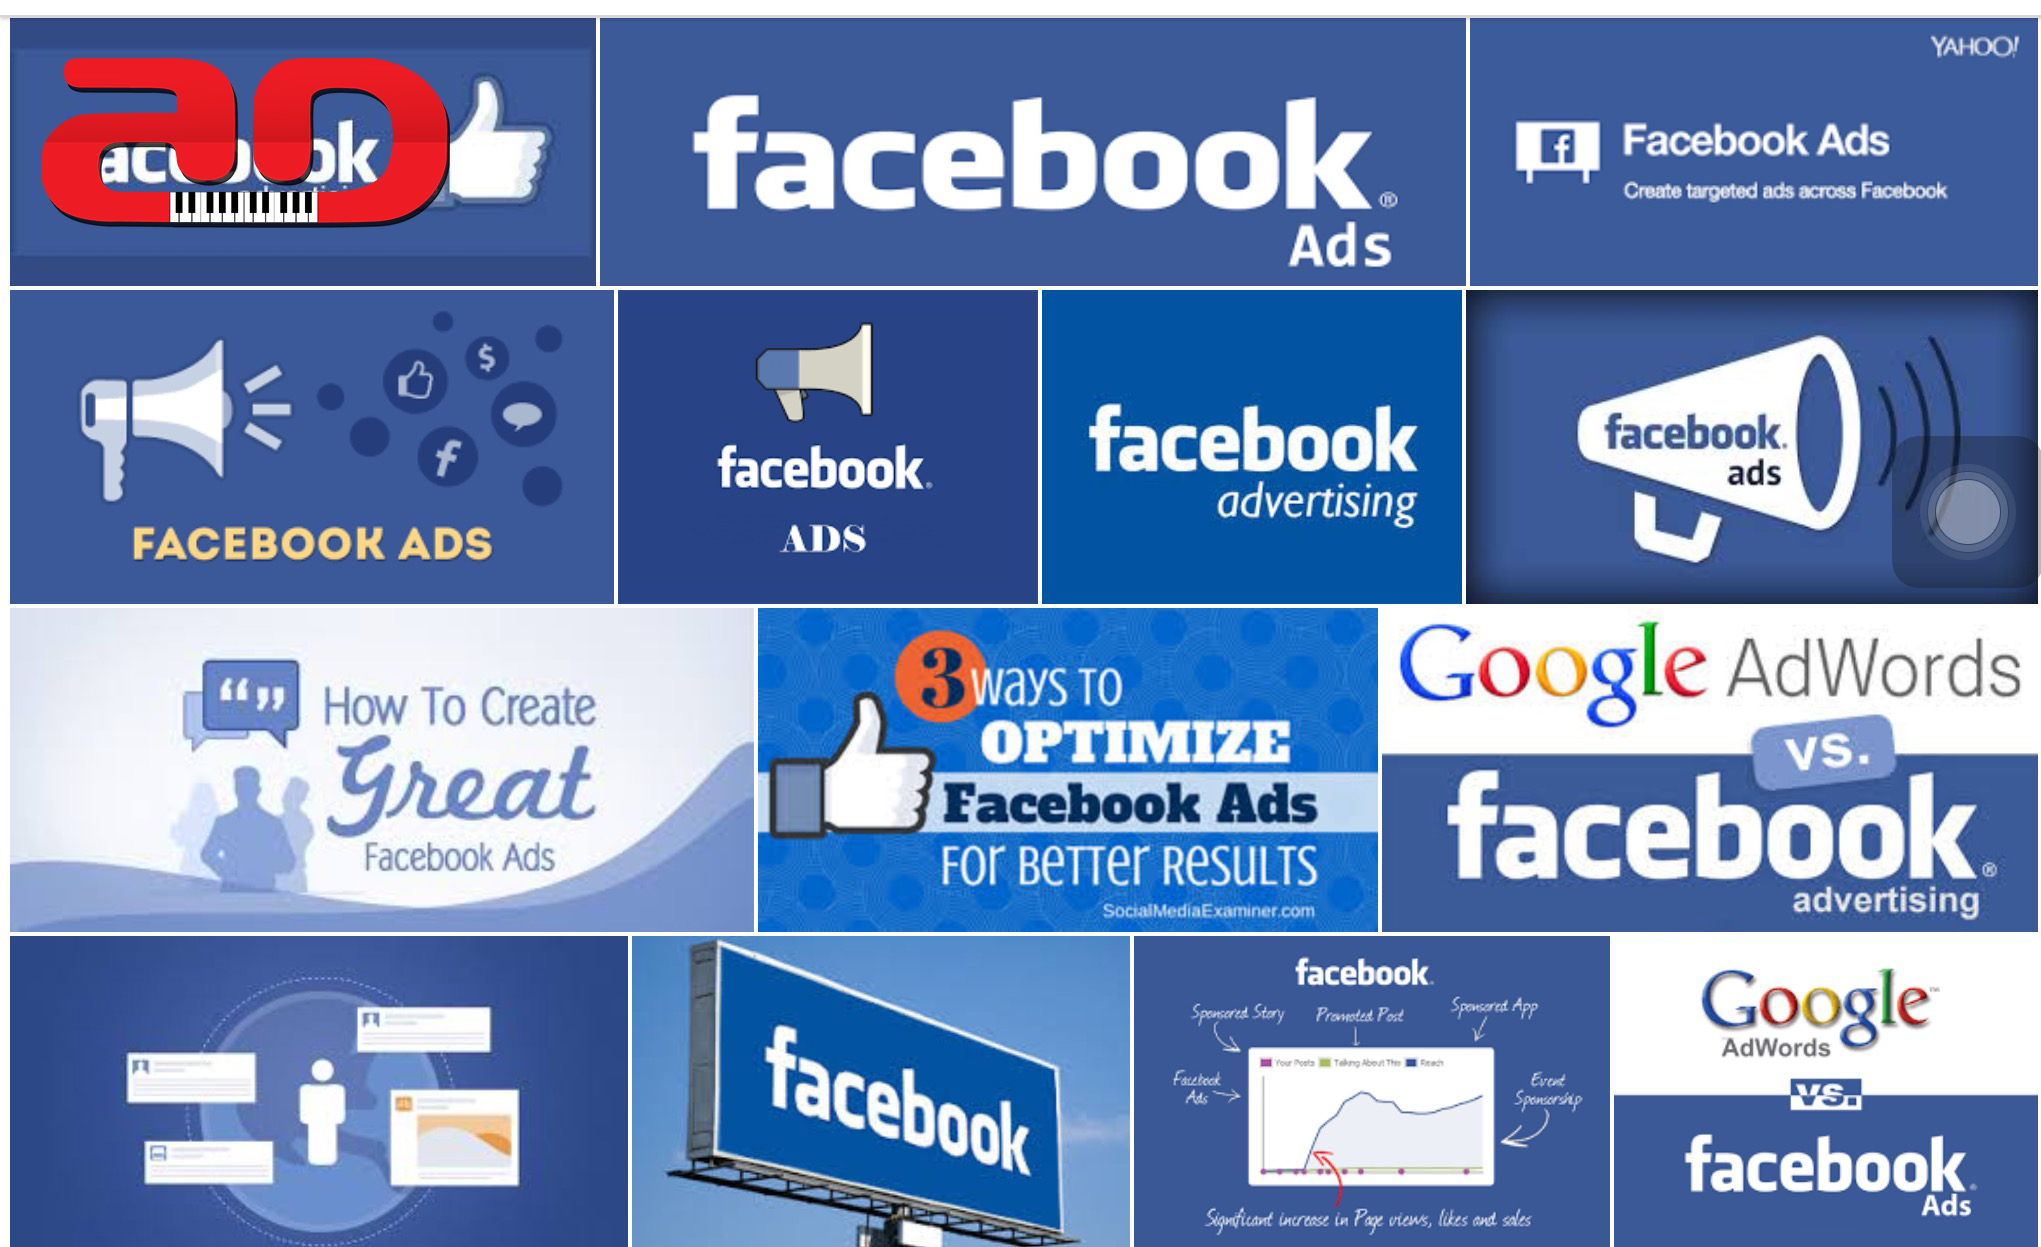 lua-chon-facebook-ads-hay-google-adwords-5